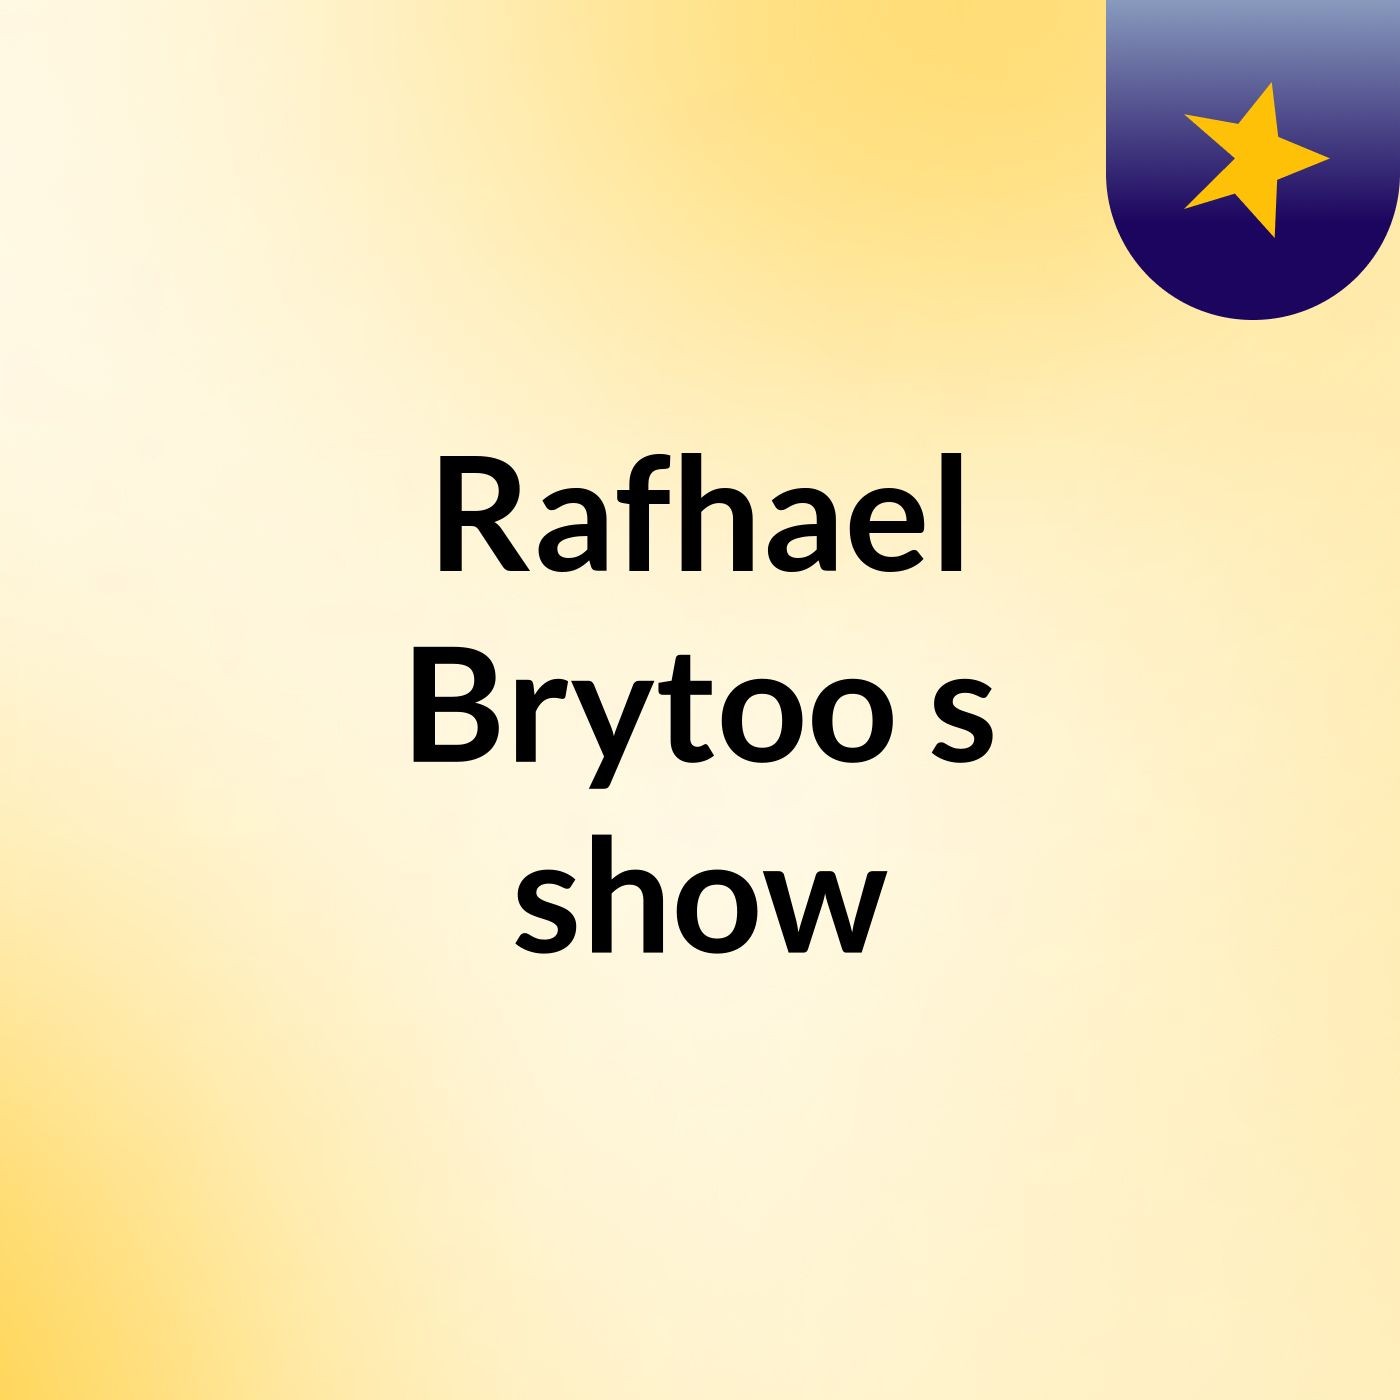 Rafhael Brytoo's show